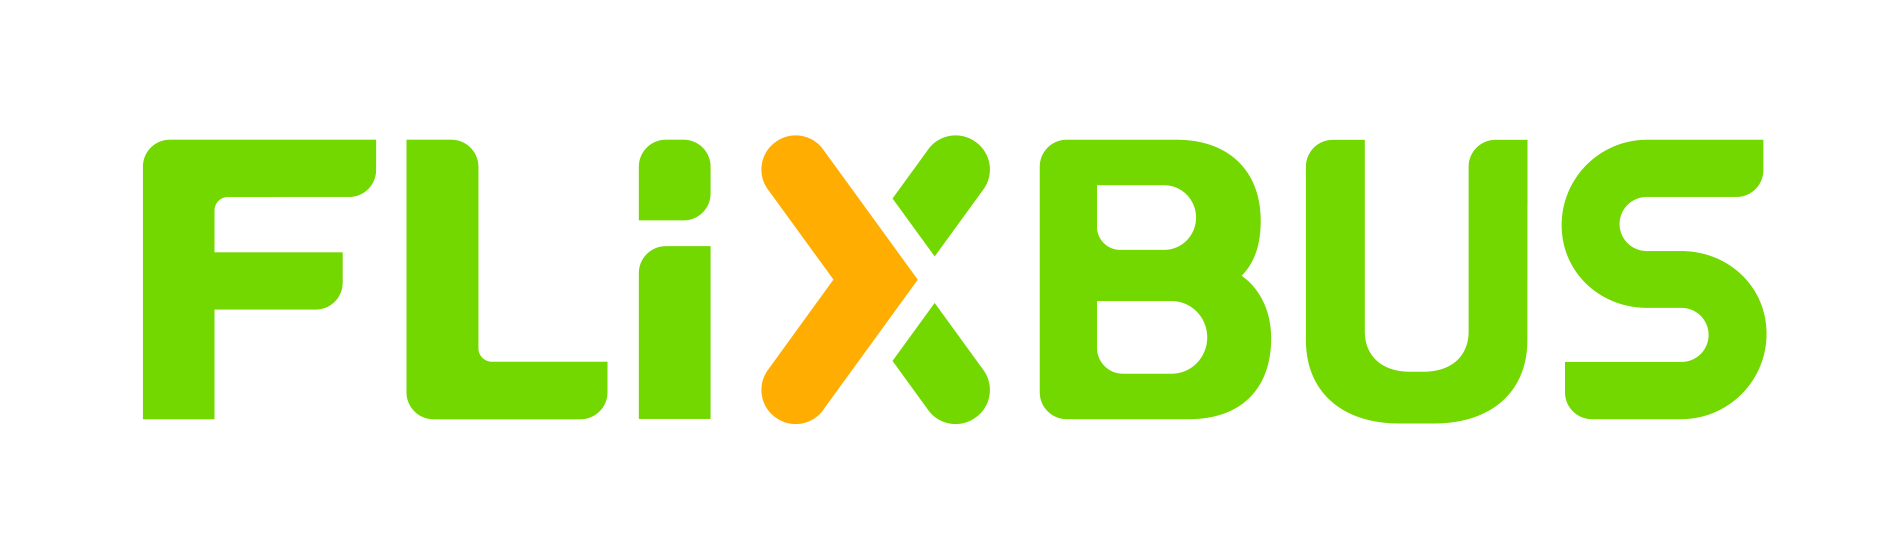 flixbus_logo_rgb